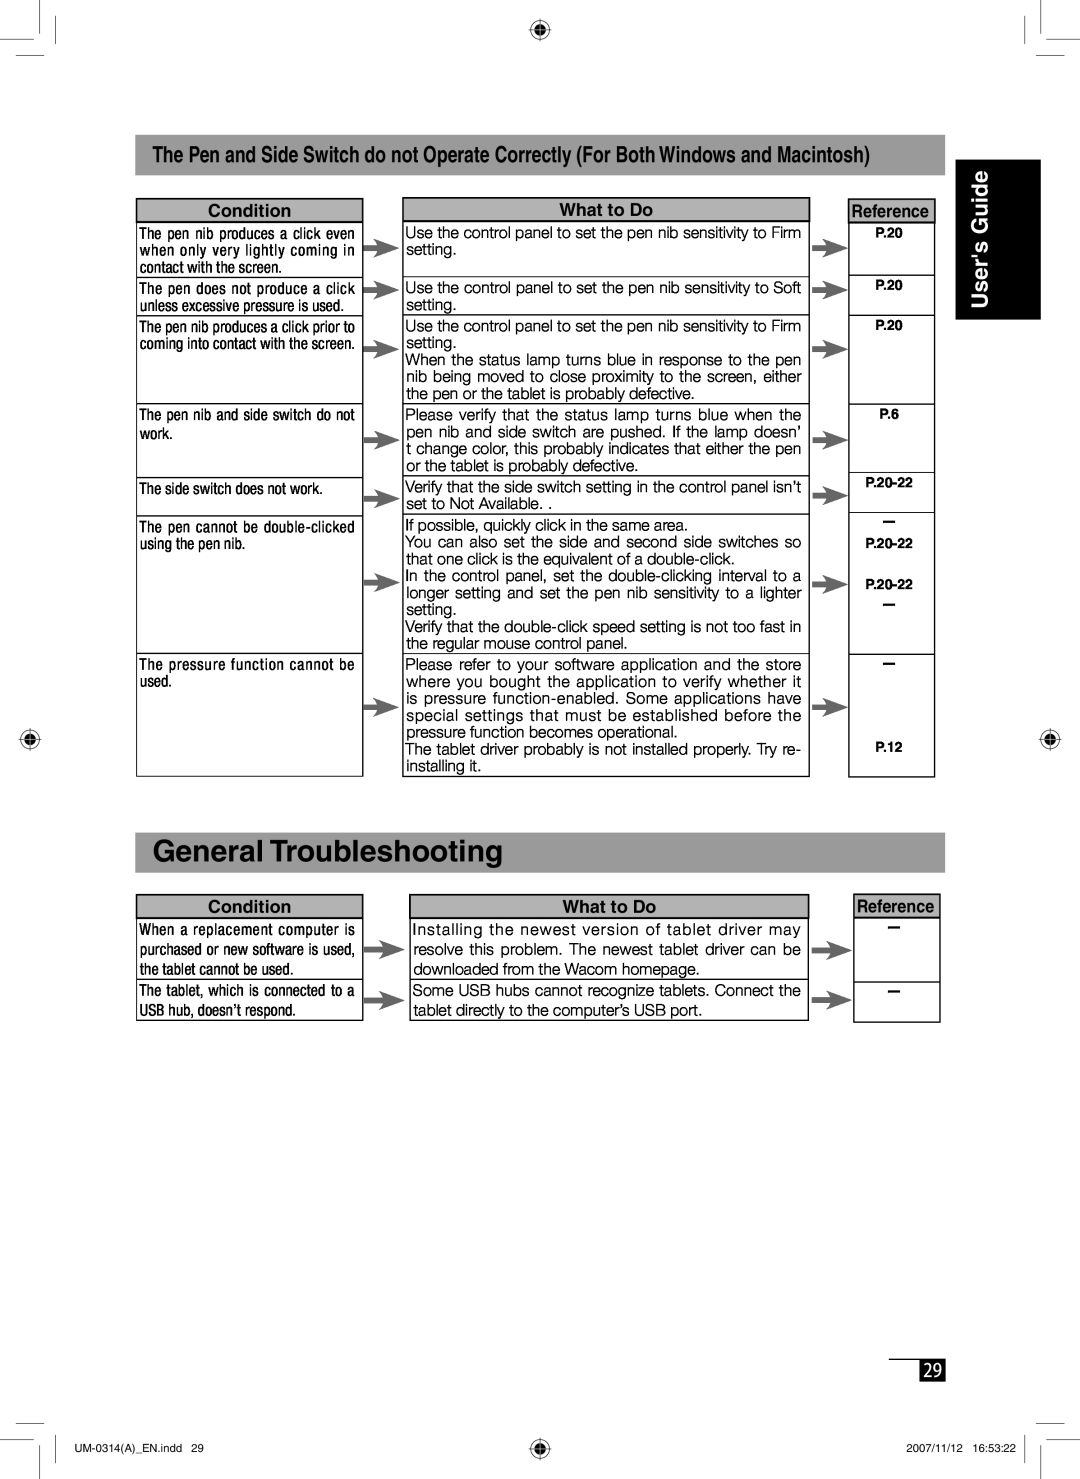 Wacom DTI-520 manual General Troubleshooting, Users Guide, P.20 P.20 P.20 P.6 P.20-22, P.20-22 P.20-22, P.12 